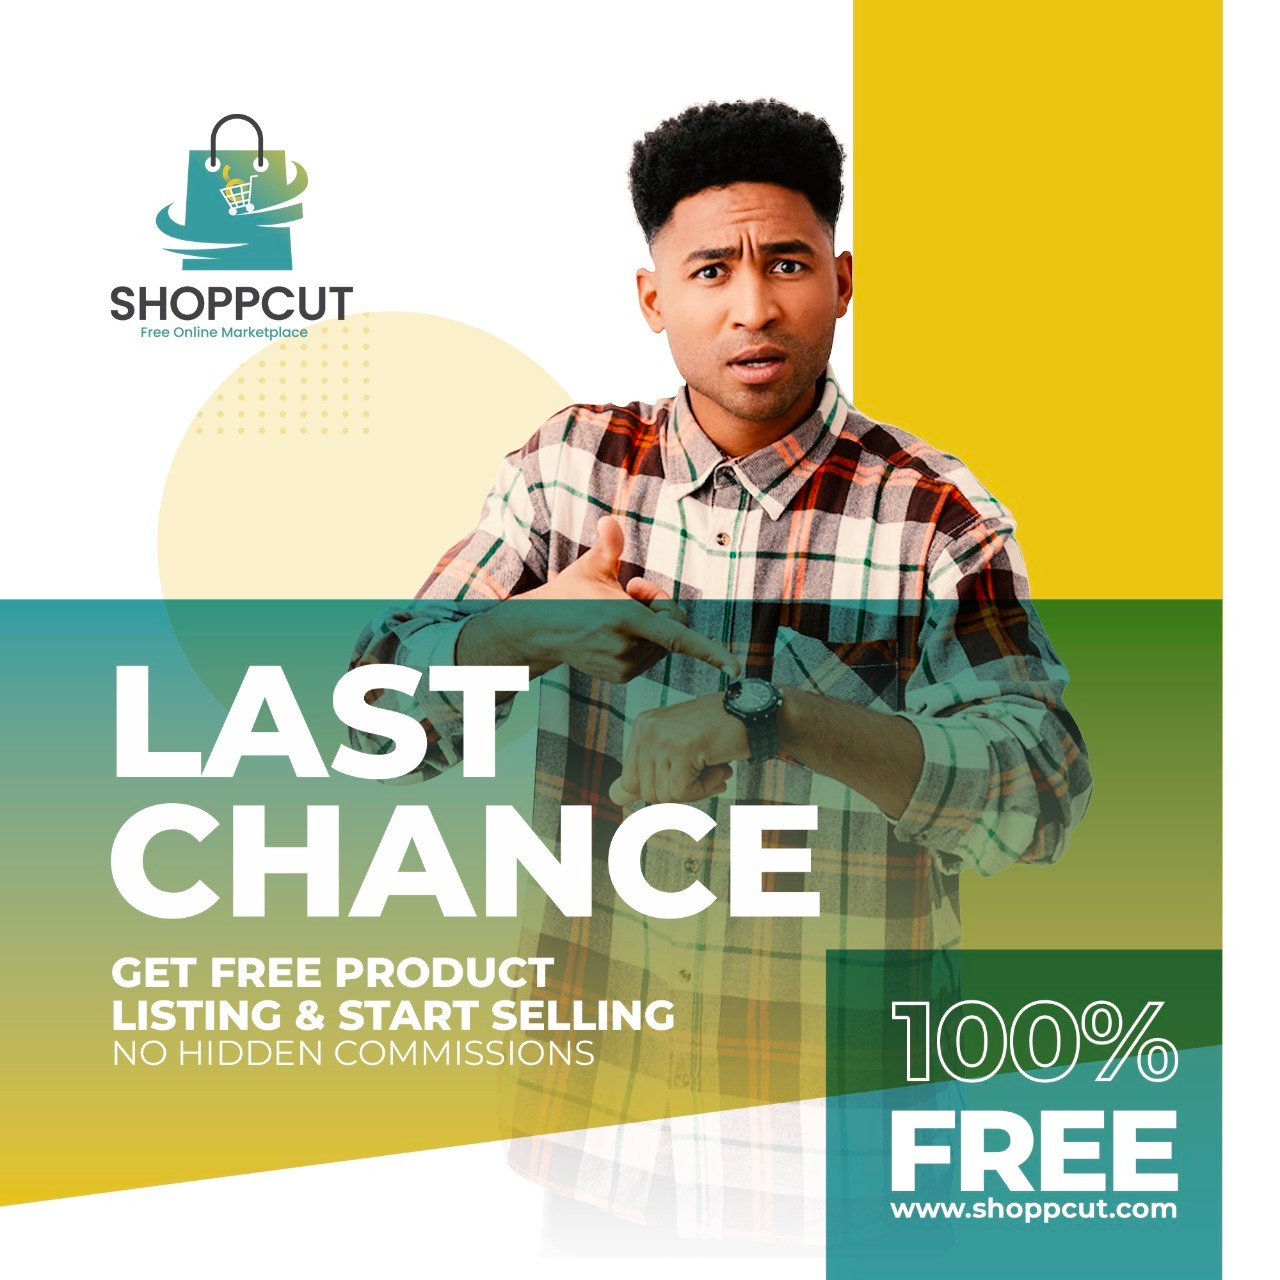 SHOPPCUL

CHANCE

GET FREE PRODUCT
T= @

1©O~:

www.shoppcut.com